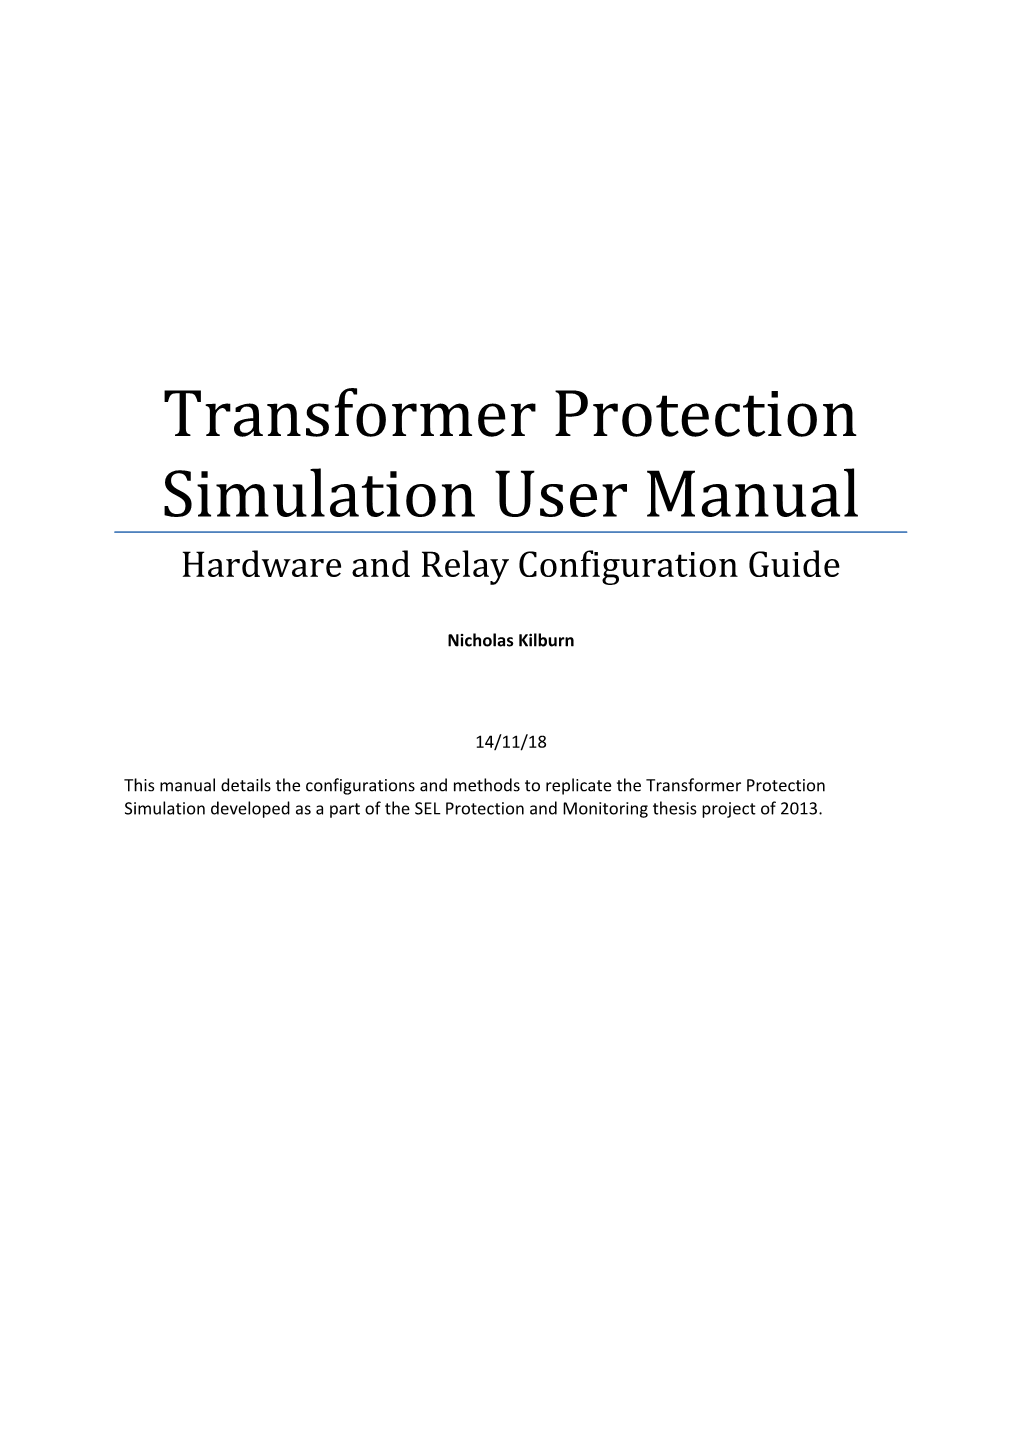 Transformer Protection Simulation User Manual